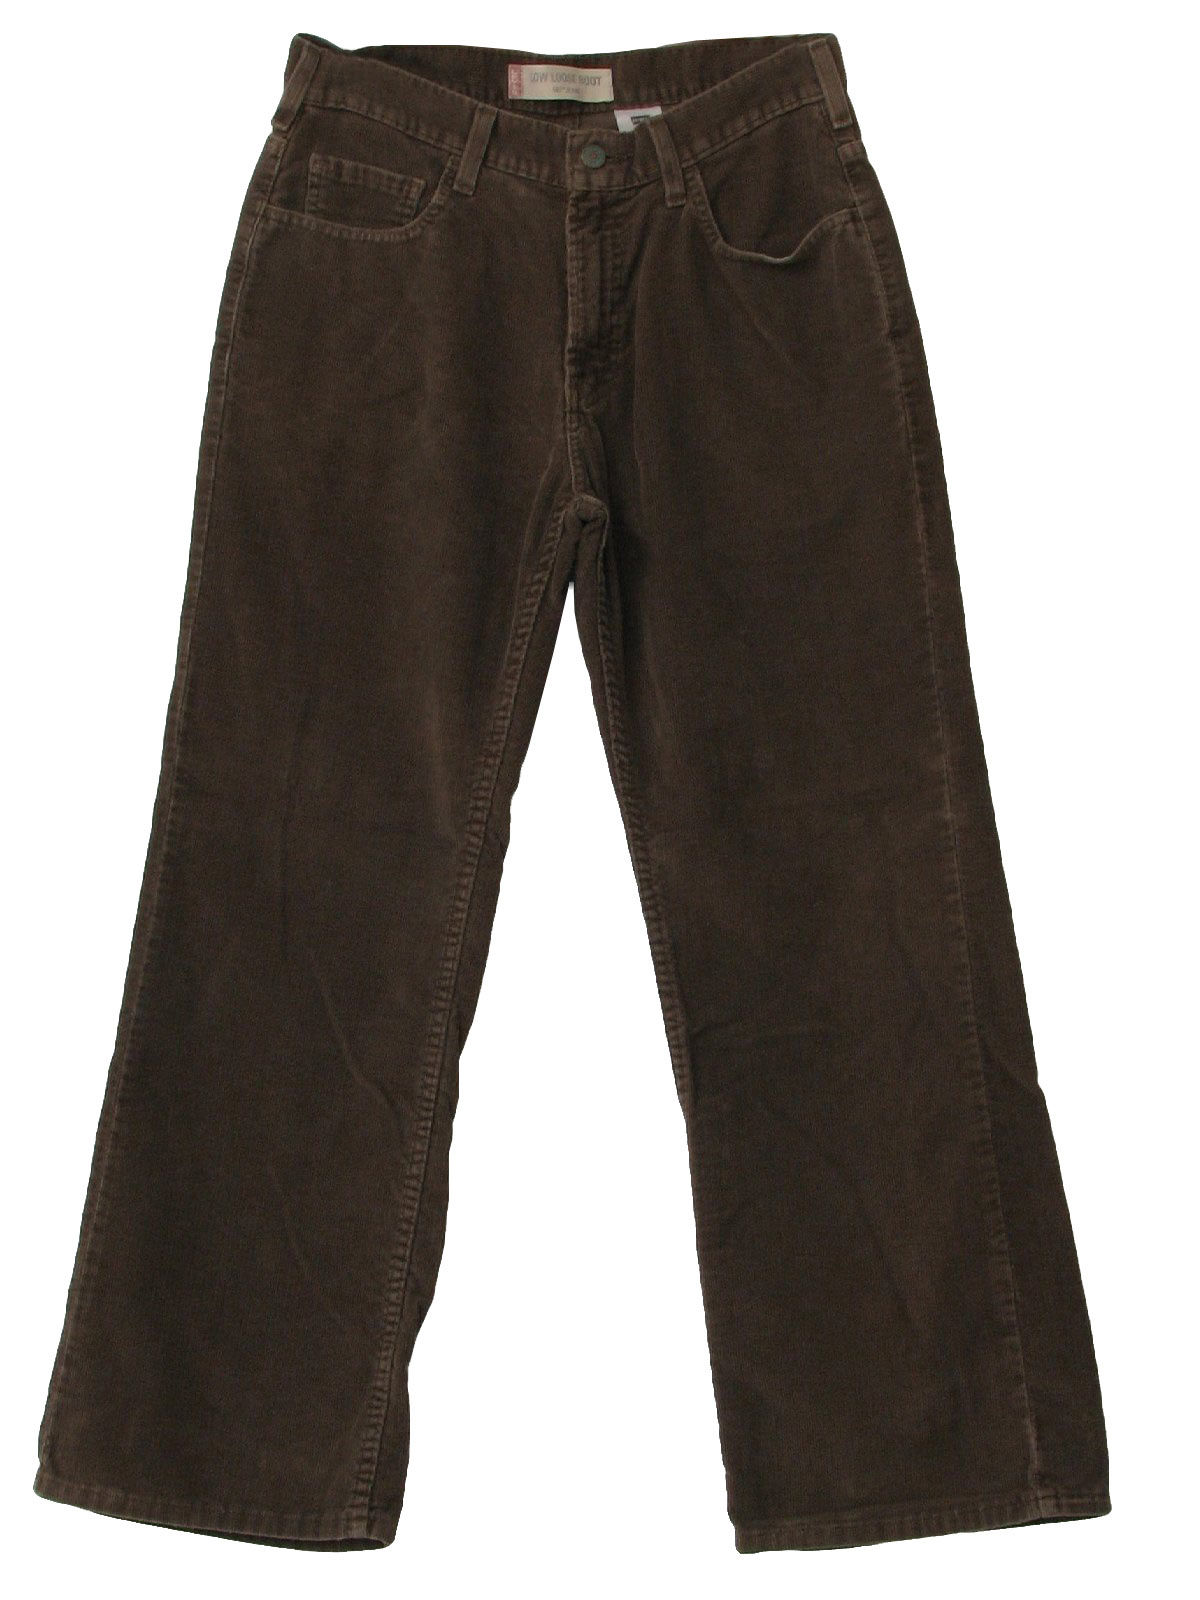 levis 567 loose boot cut jeans